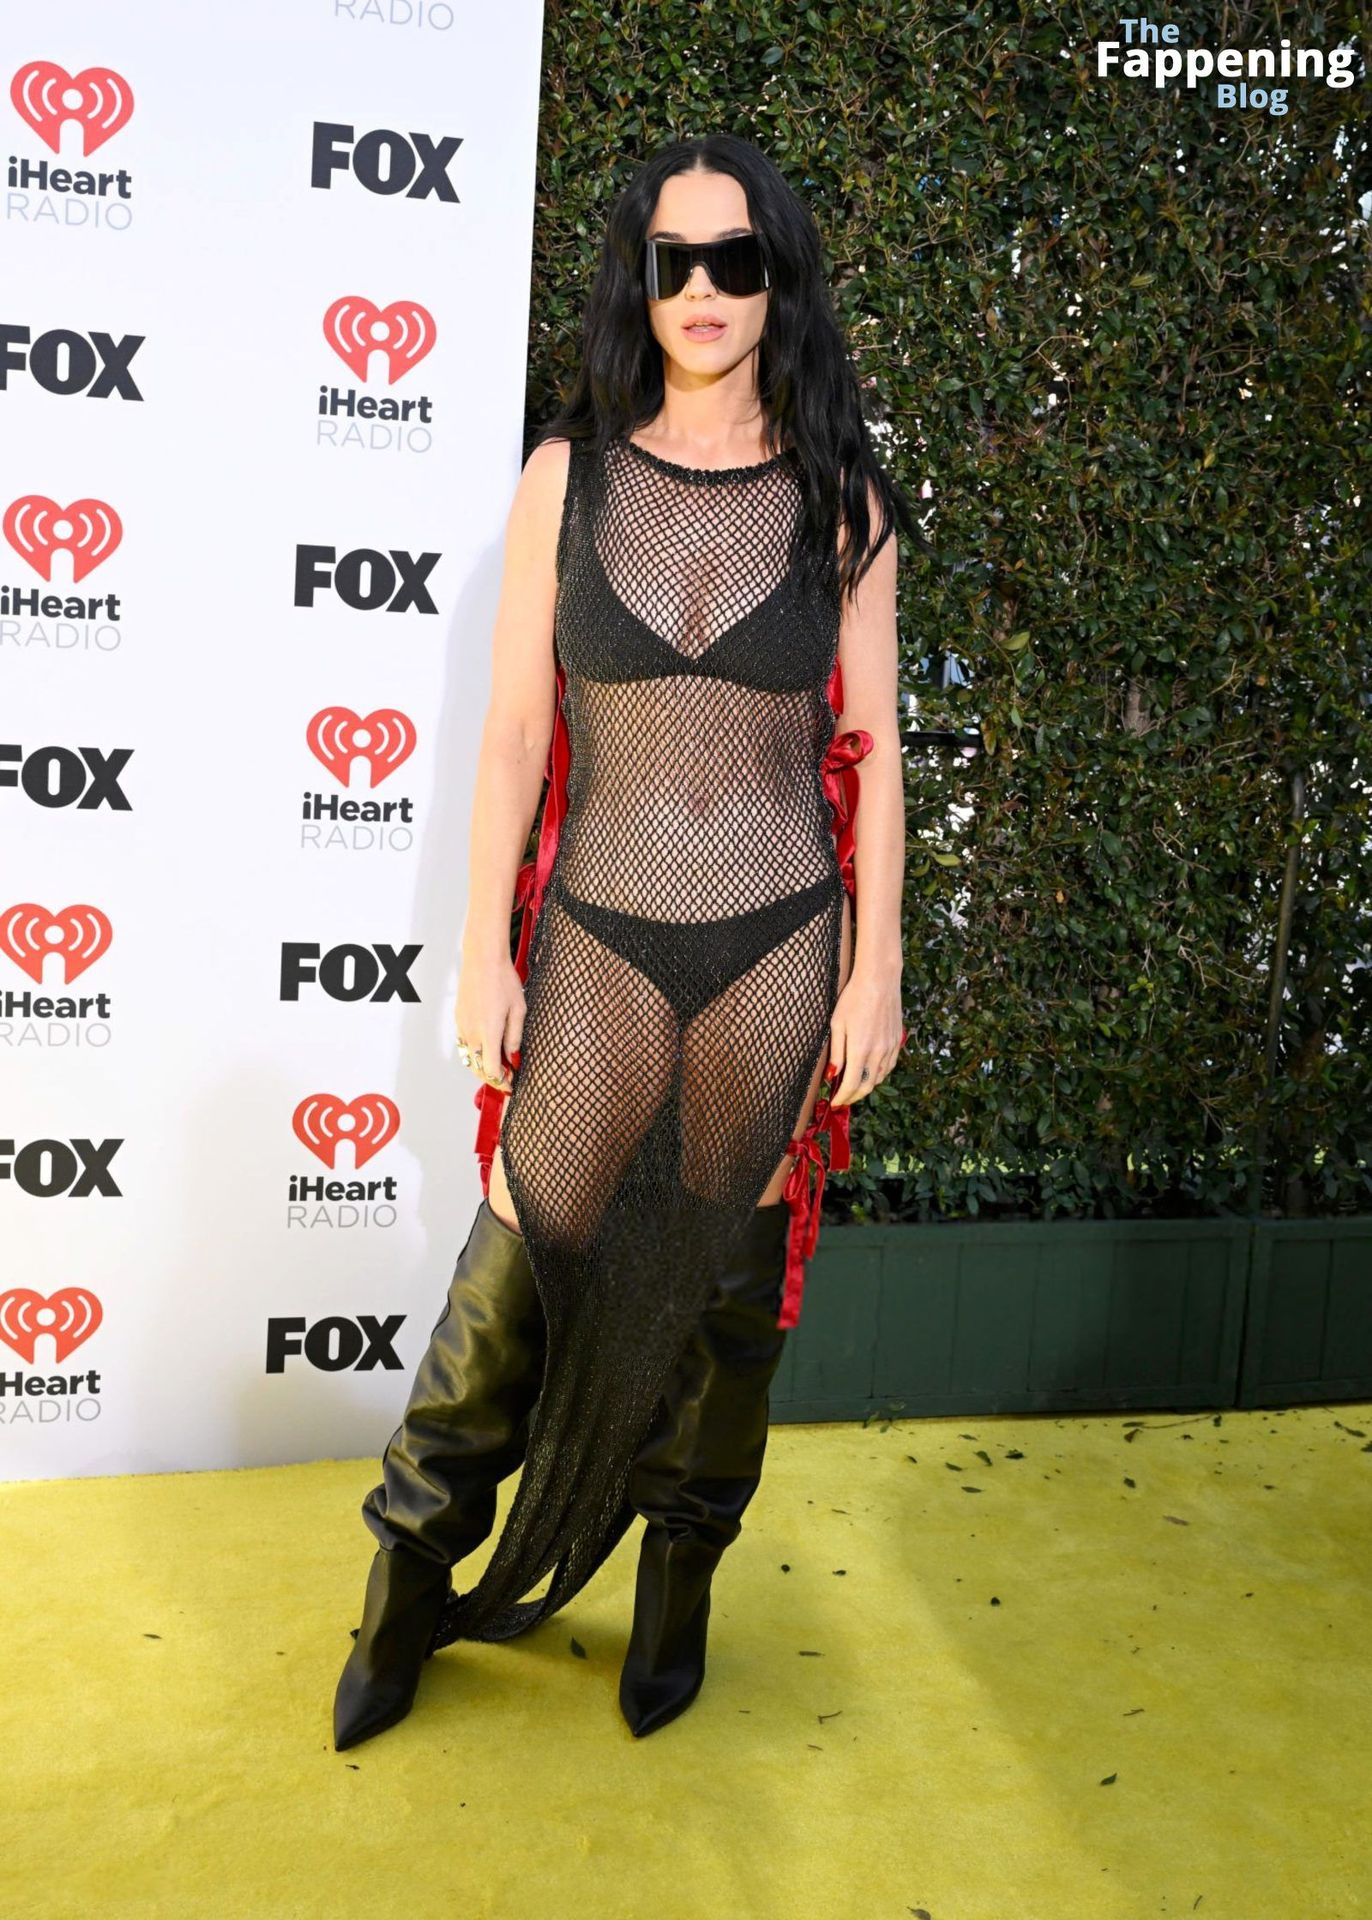 Katy-Perry-Revealing-Attire-iHeartRadio-Music-Awards-23-thefappeningblog.com_.jpg